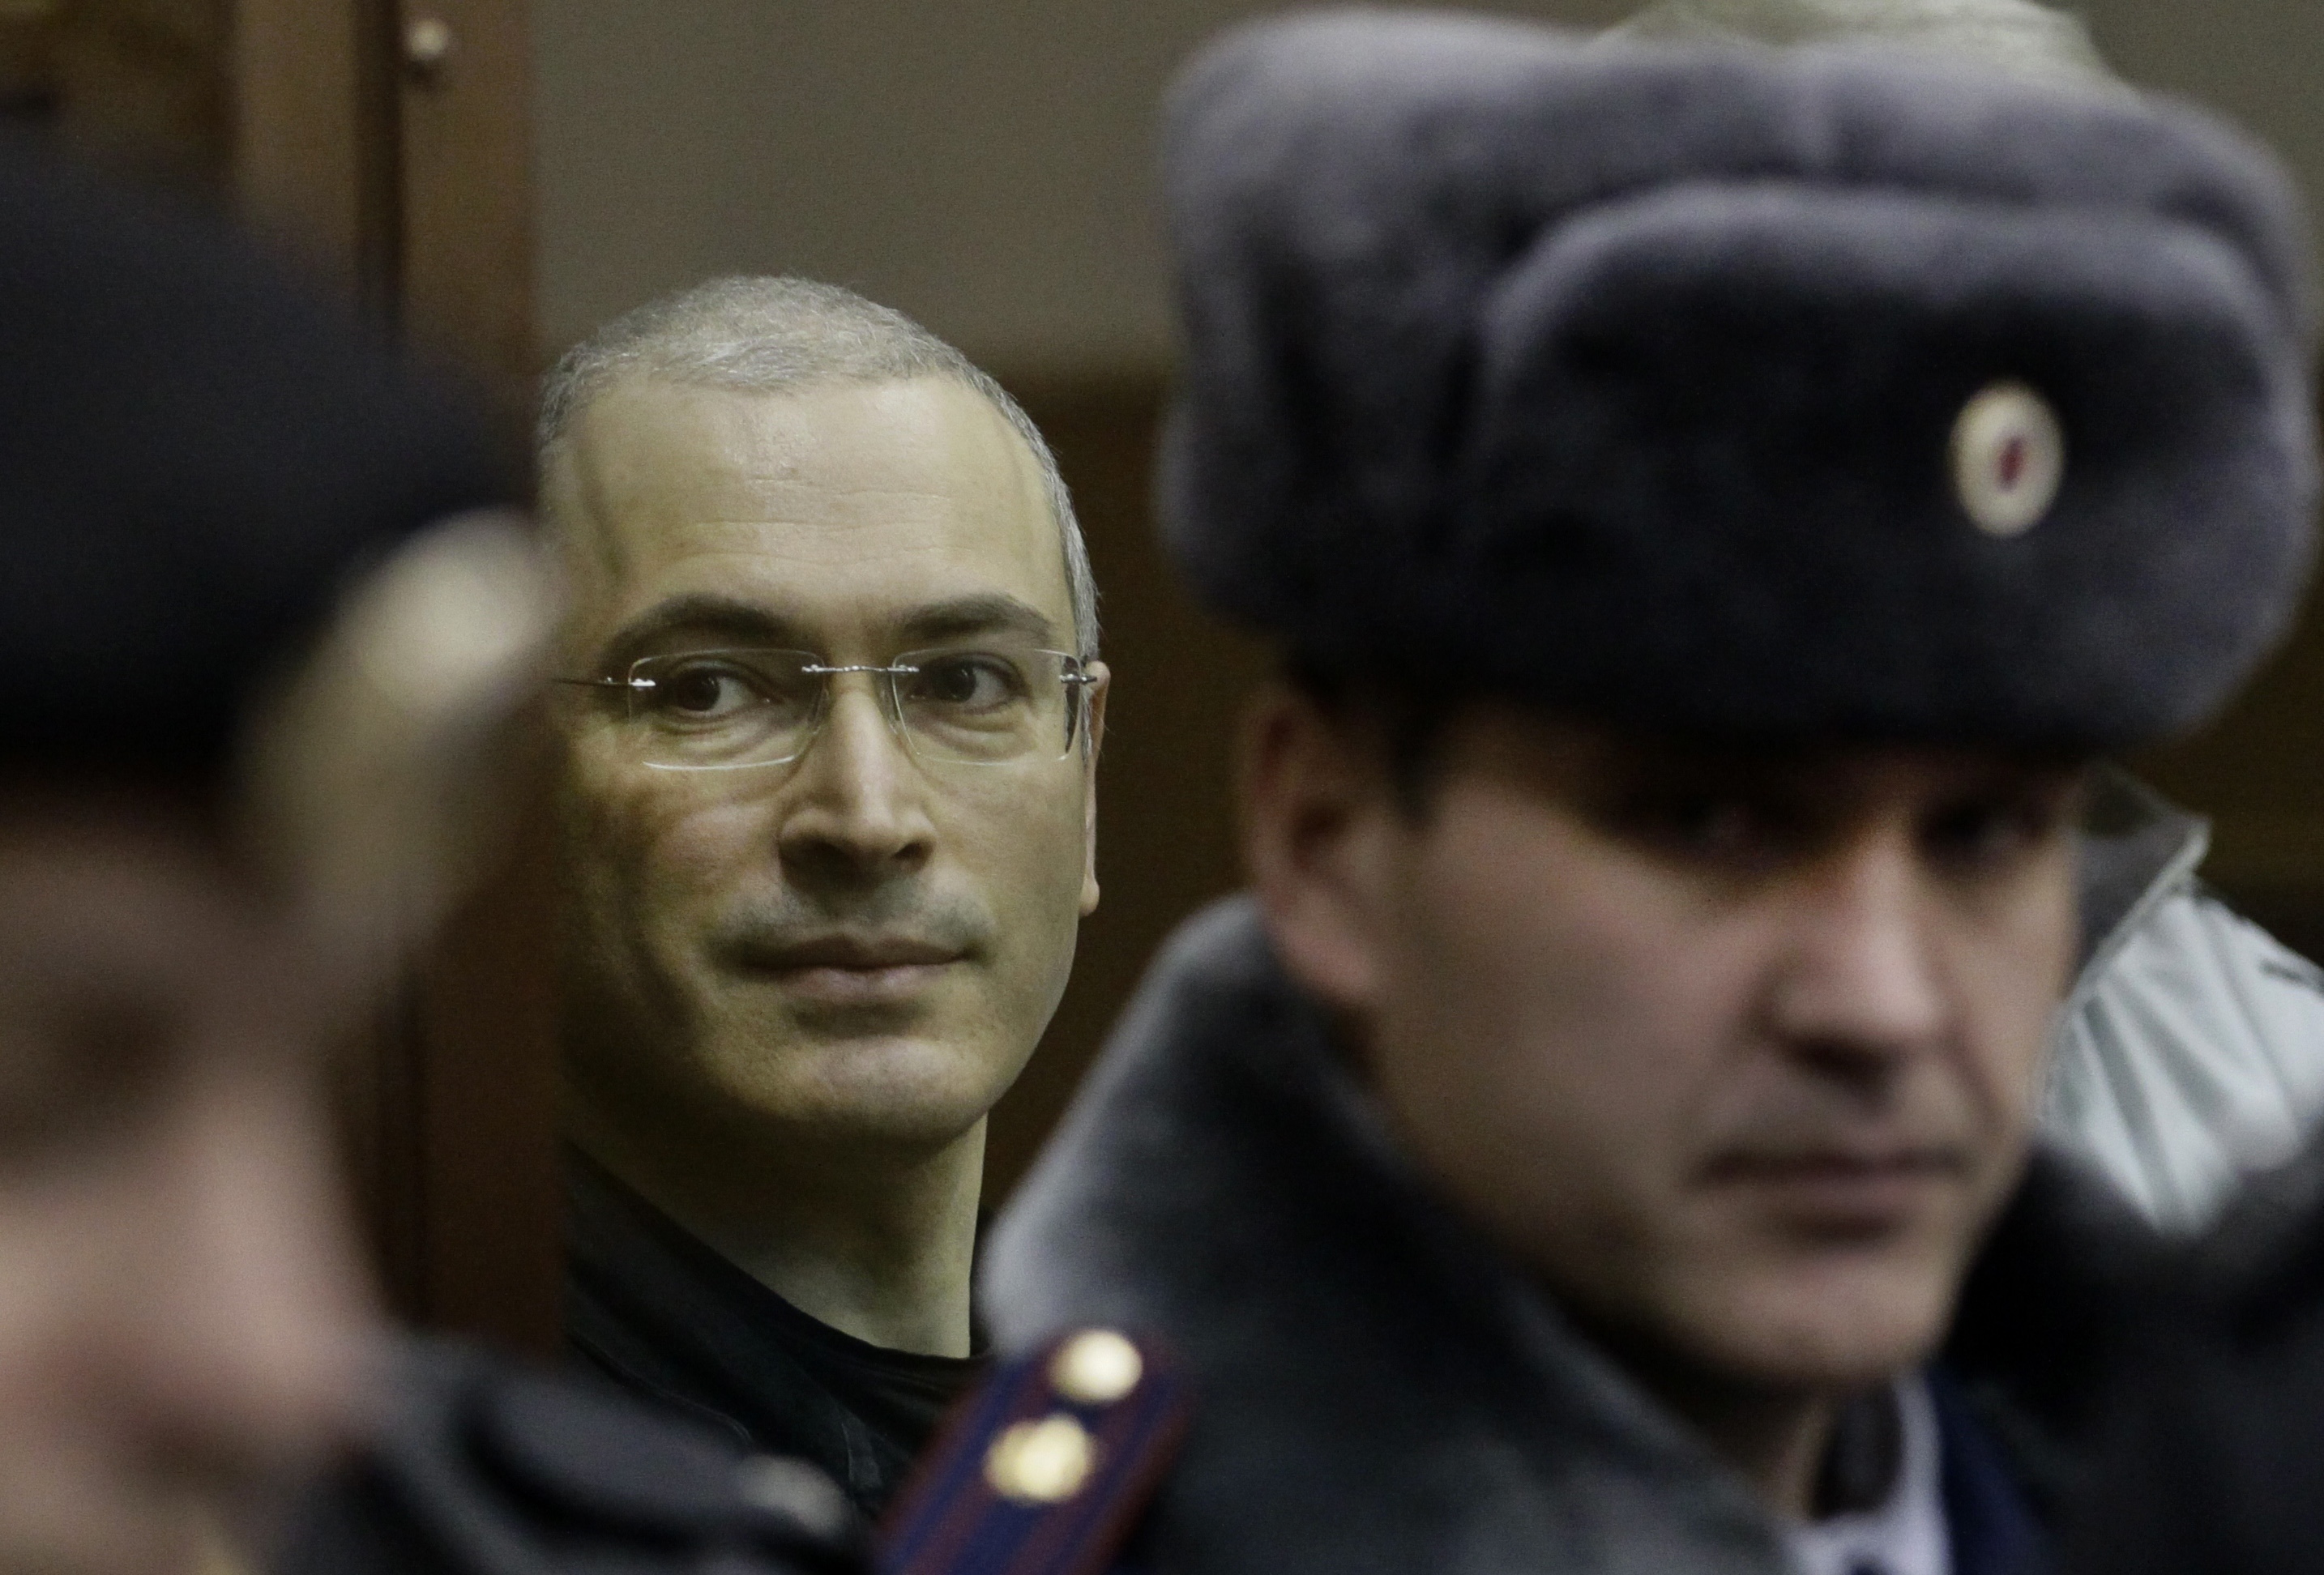 “Putin ha i giorni contati”: parla Mikhail Khordorovsky, l’oligarca russo in esilio